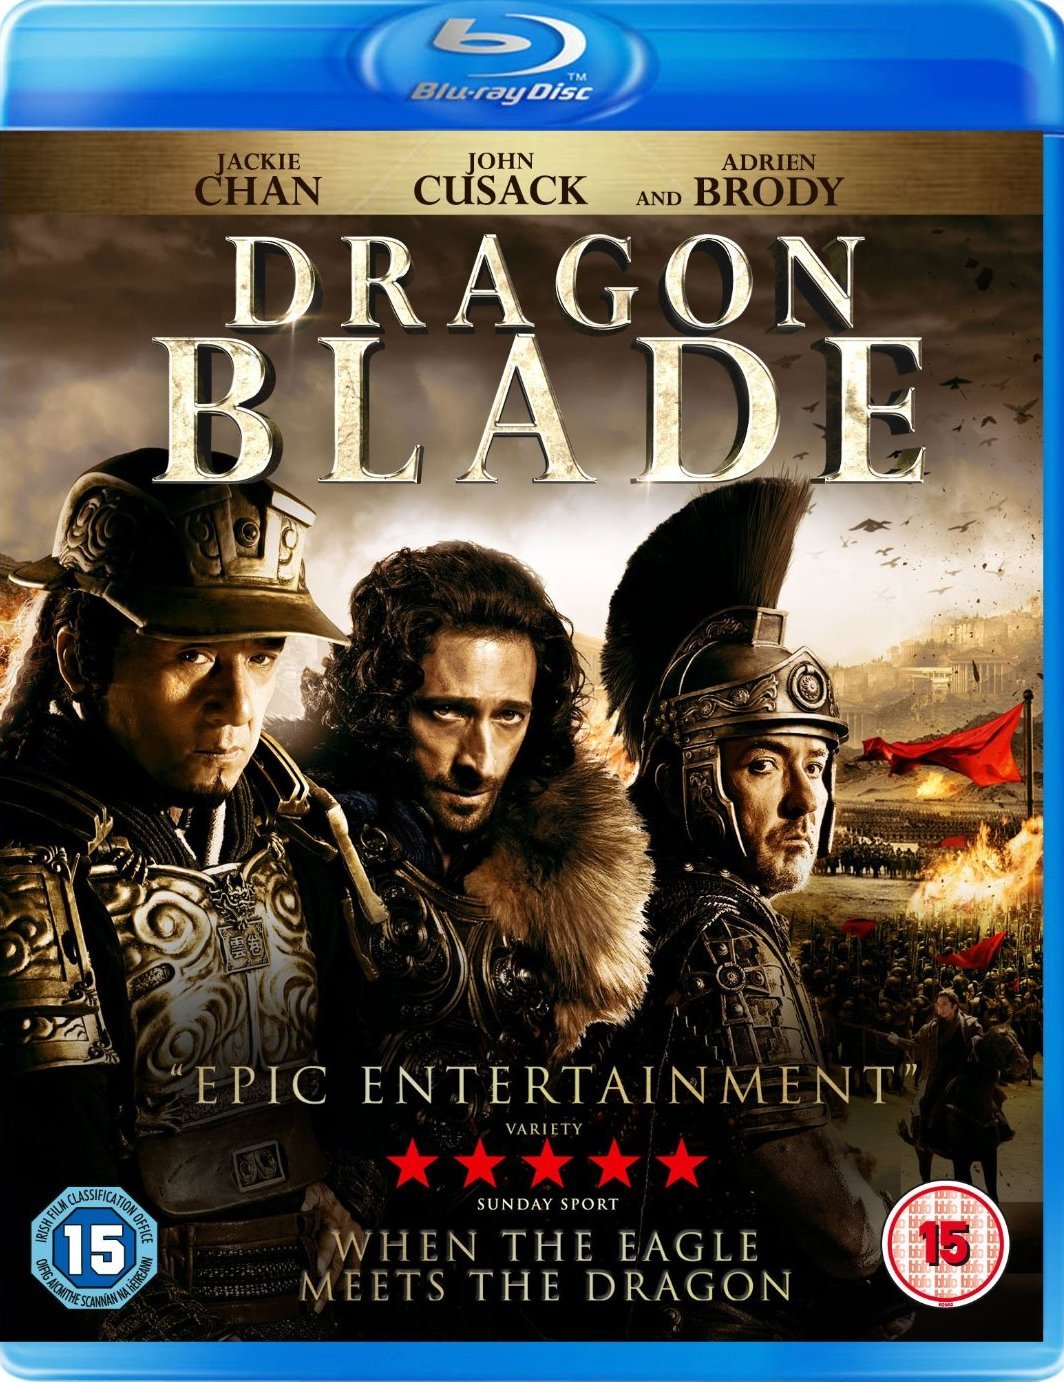 Dragon Blade - Jackie Chan  Jackie chan movies, Jackie chan, Kung fu movies